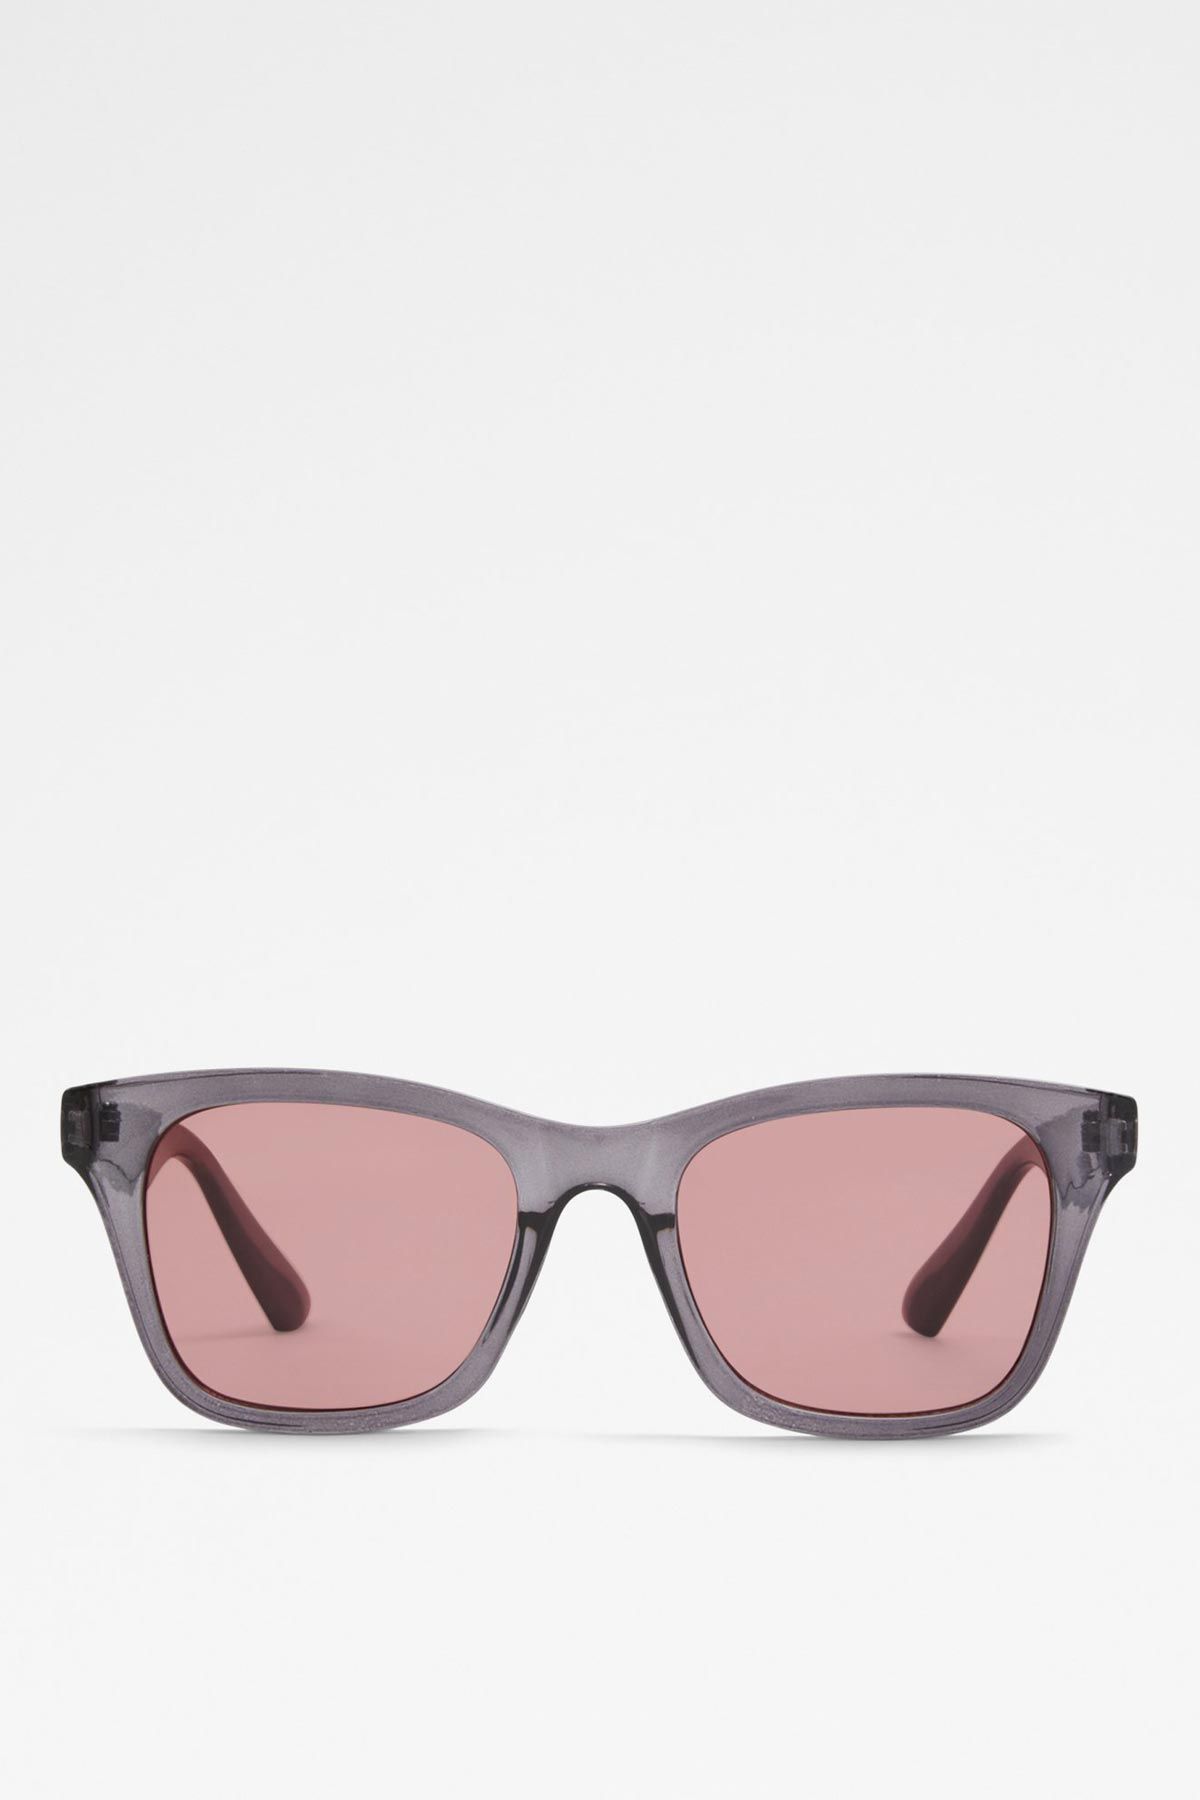 Aggregate more than 181 aldo sunglasses review latest